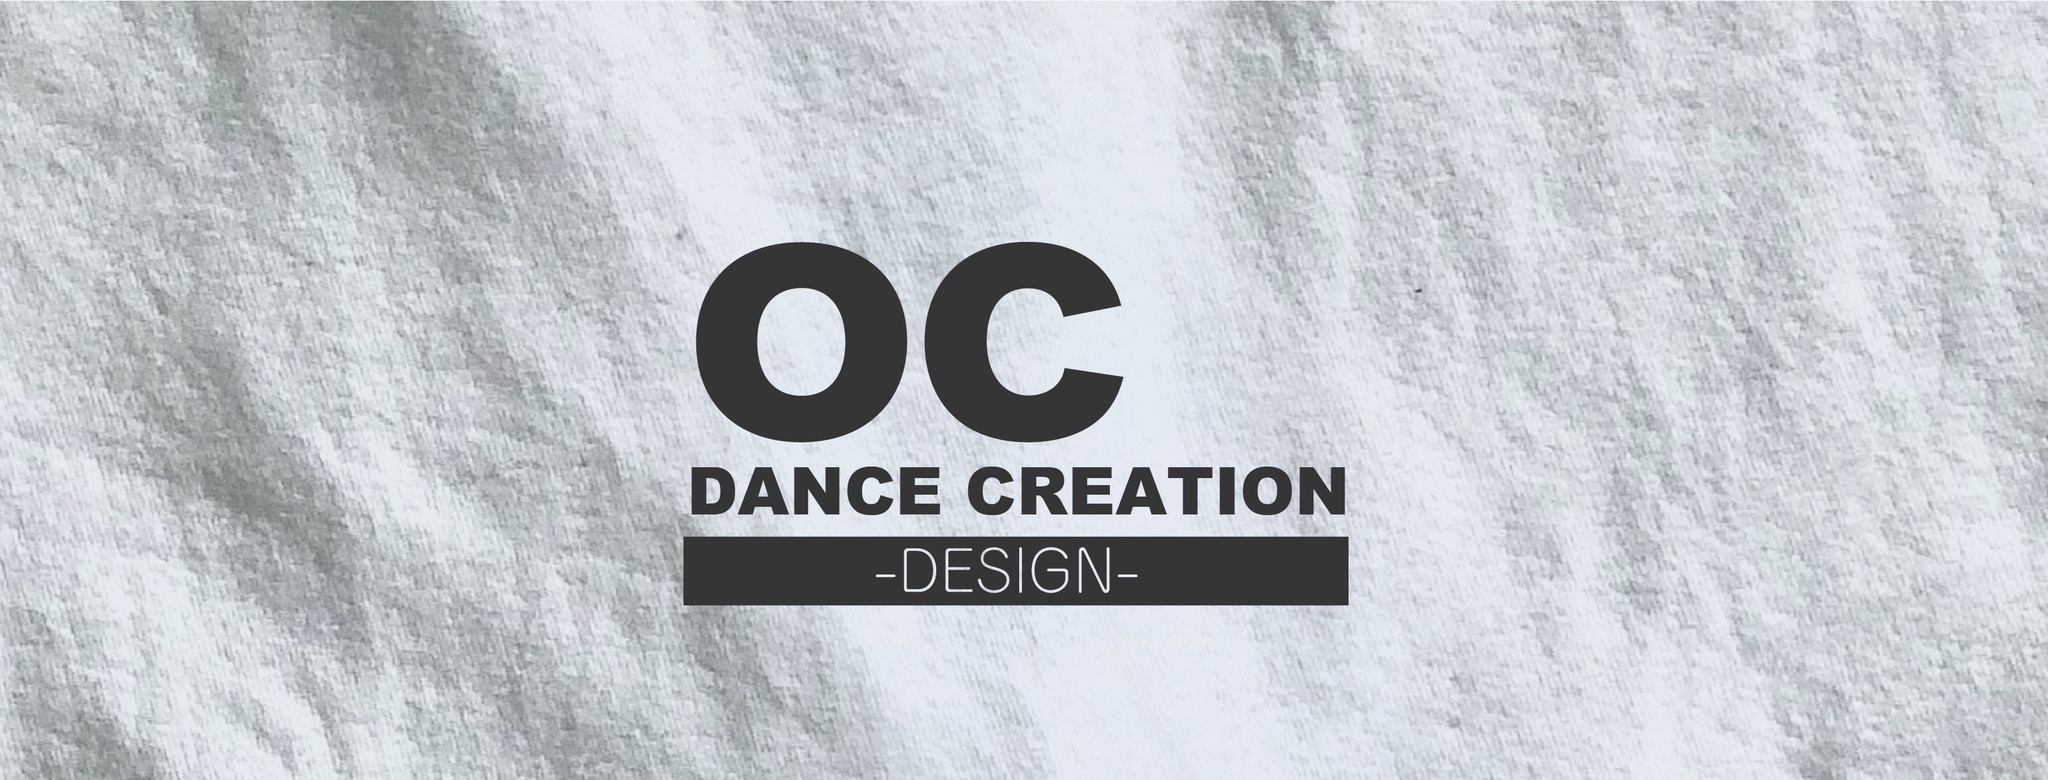 OC DANCE CREATION -DESIGN-